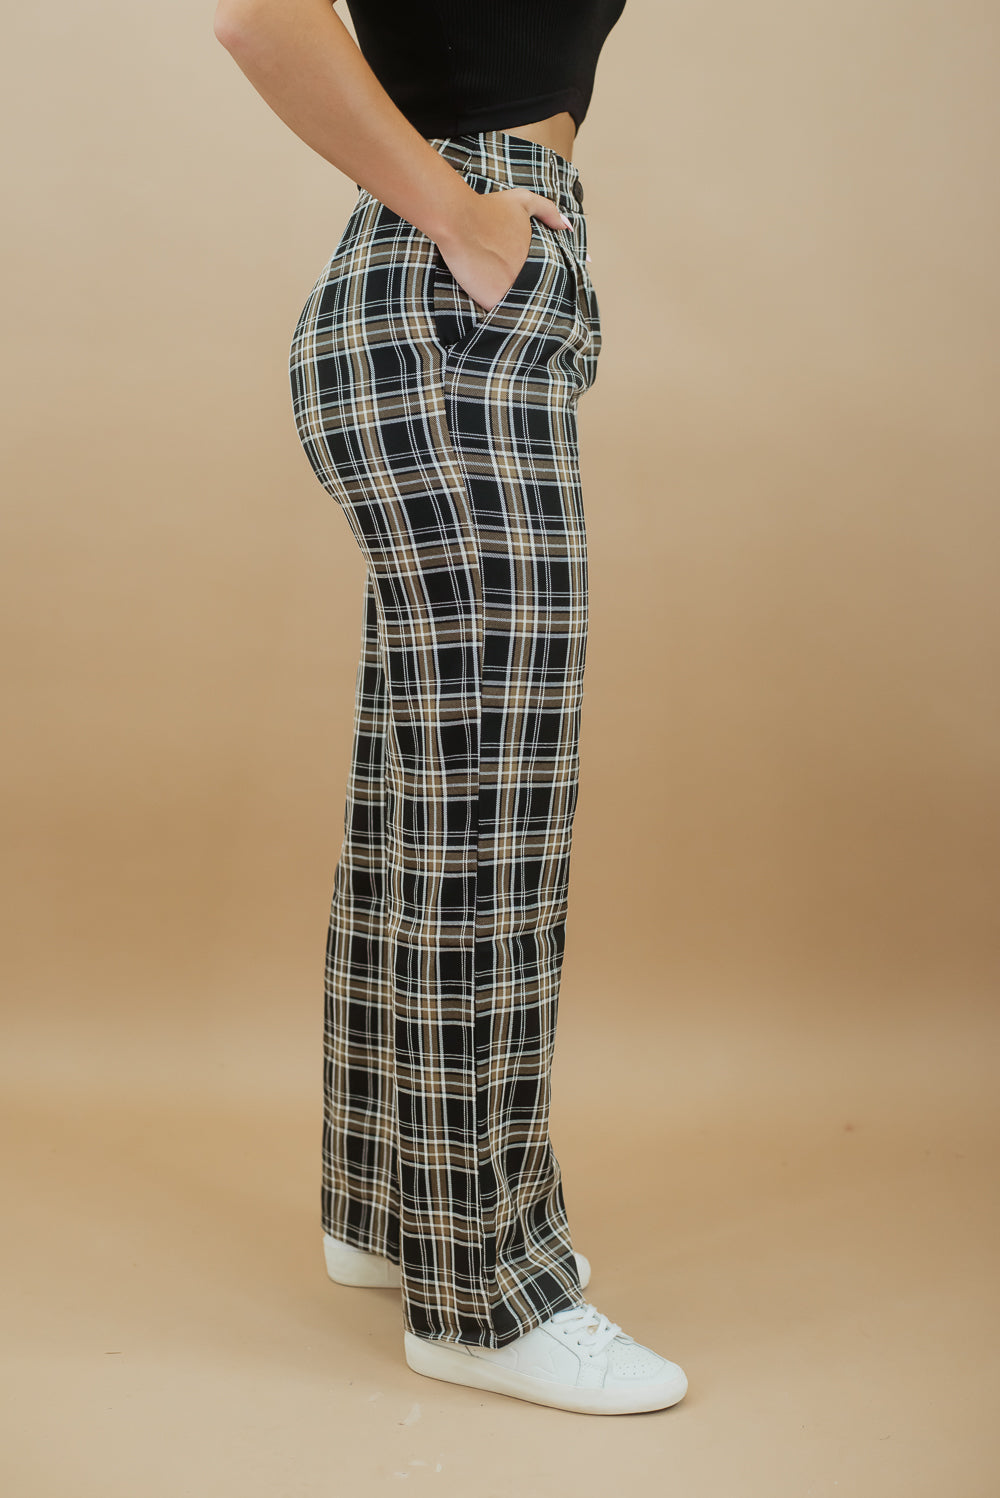 Boutique PAROSH Black and white plaid print pure new wool pants Retail  price 260 Size S